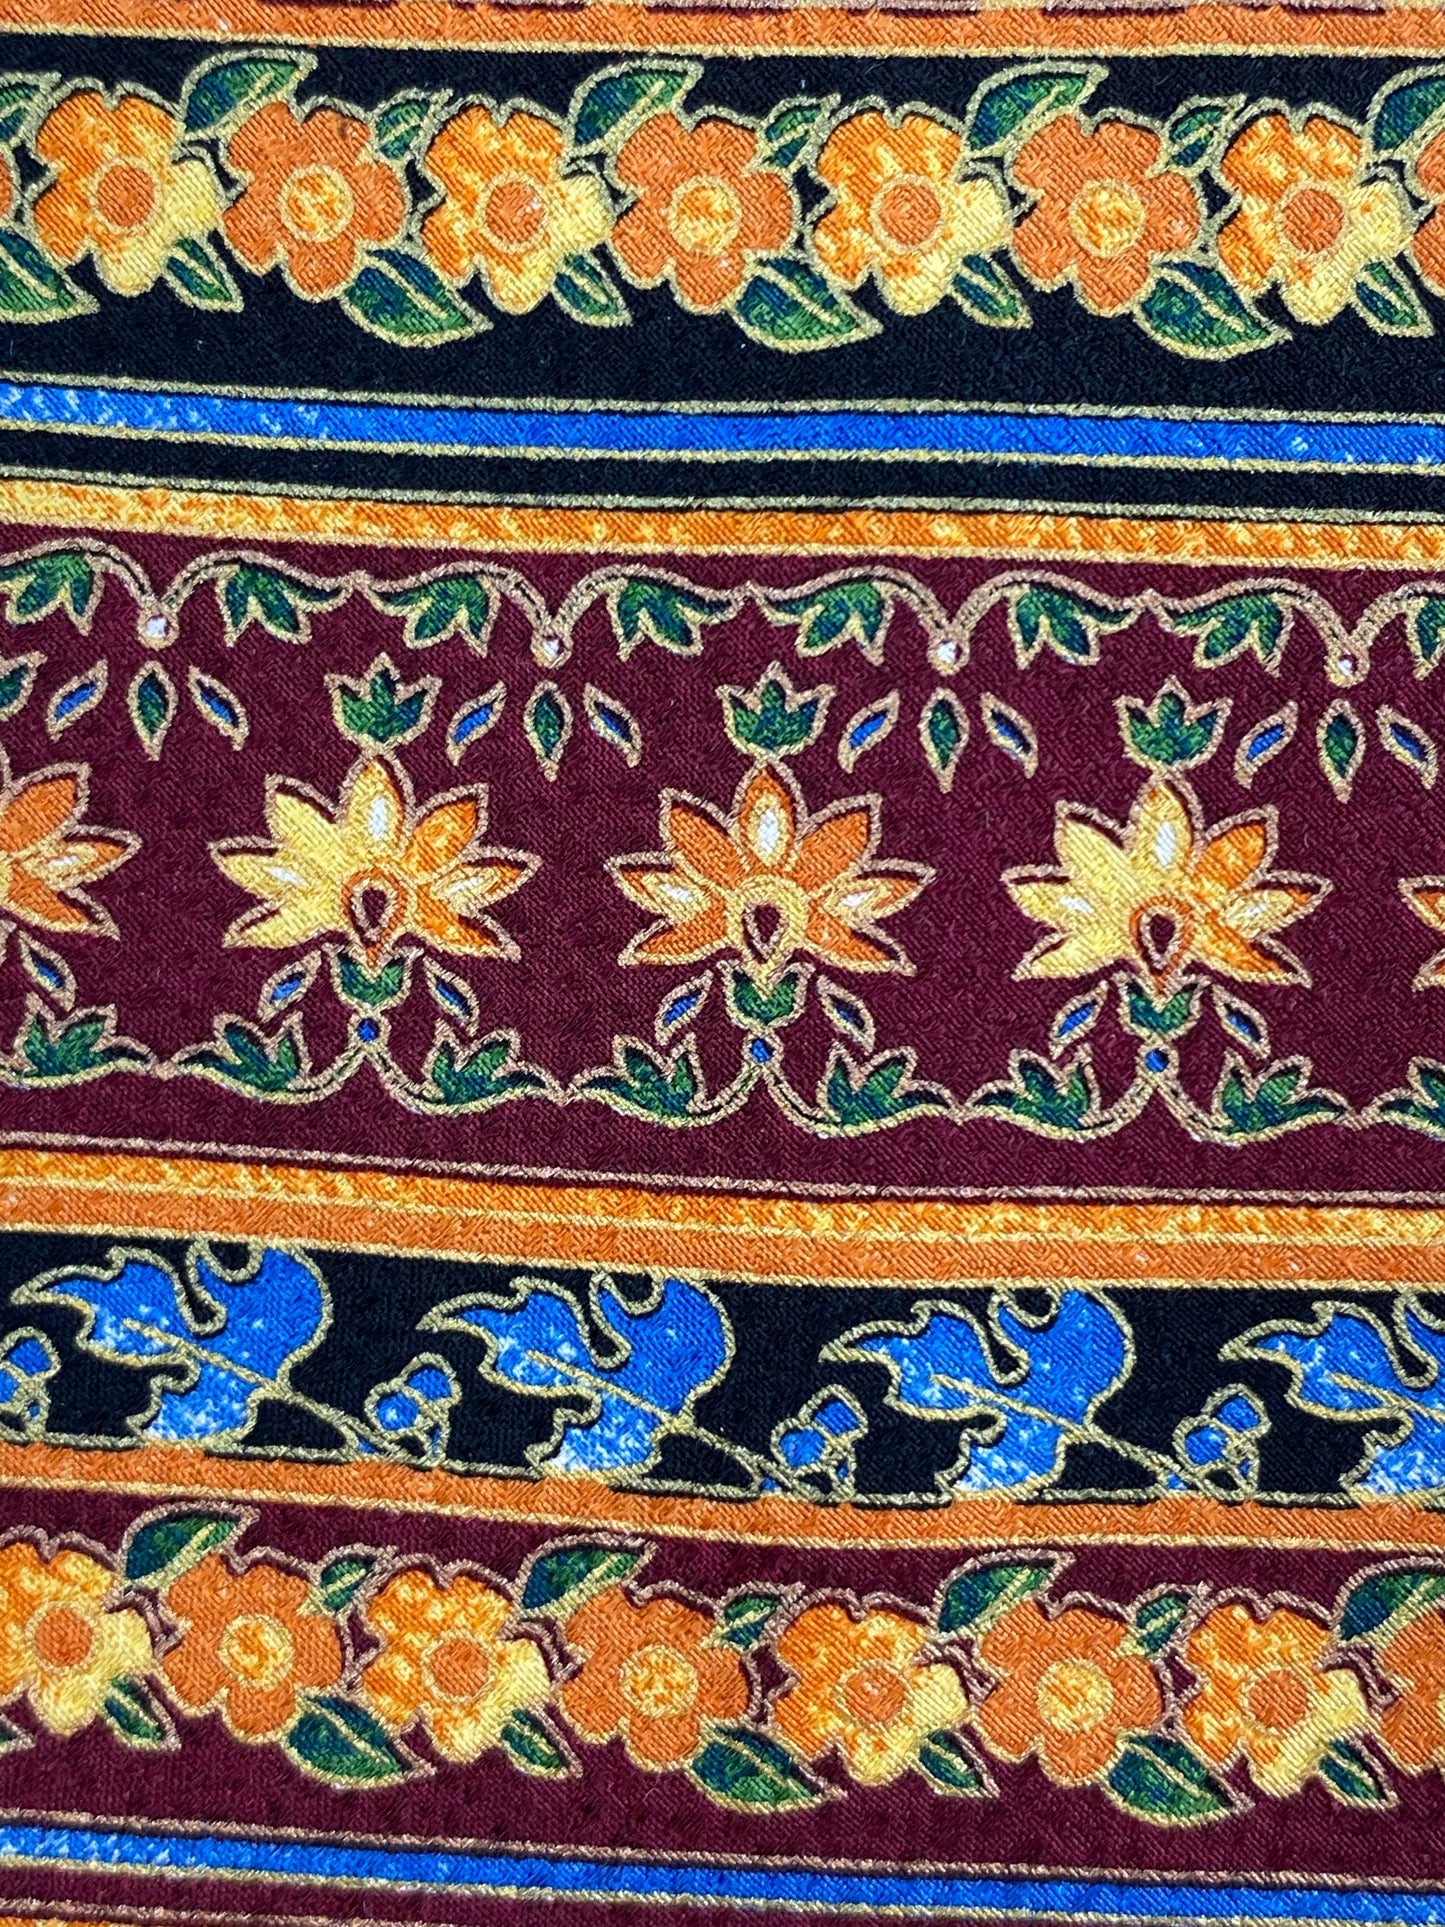 Close-up detail of: 90s Deadstock Silk Necktie, Men's Vintage Orange/ Maroon/ Blue Floral Horizontal Stripe Pattern Tie, NOS